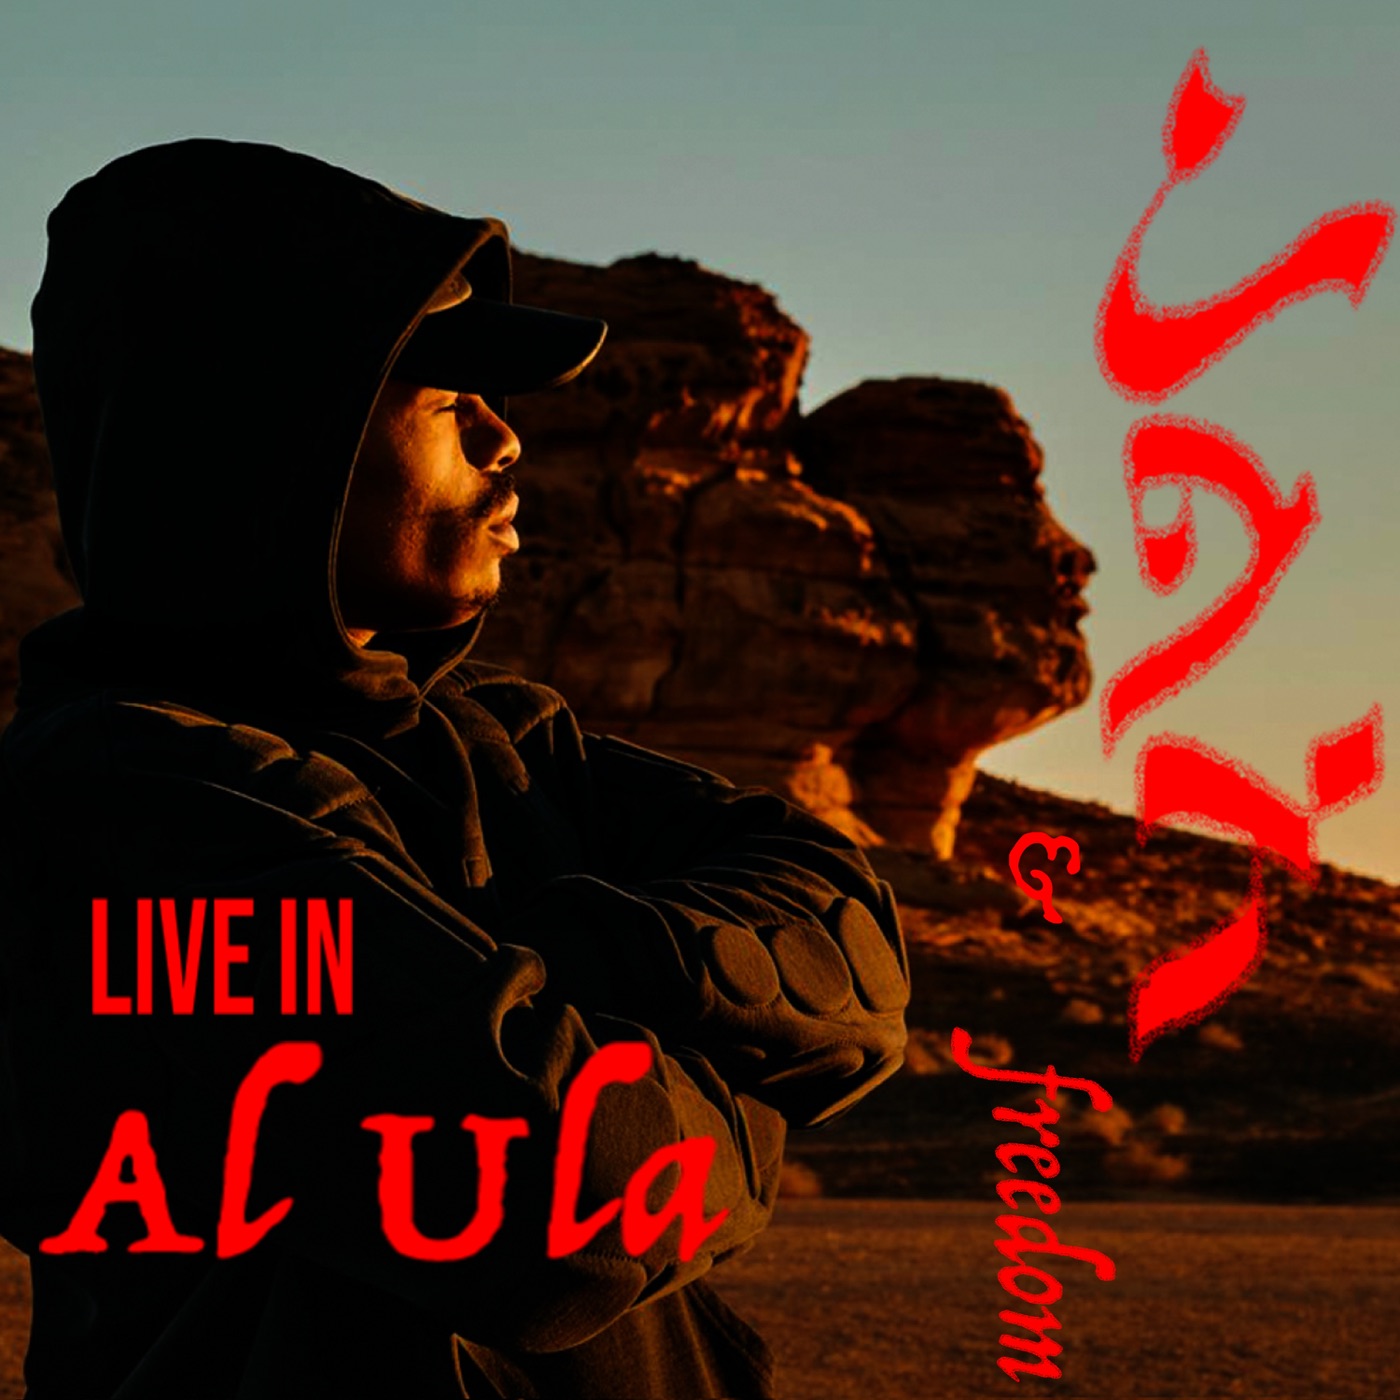 Live in Saudi Arabia by YG Marley